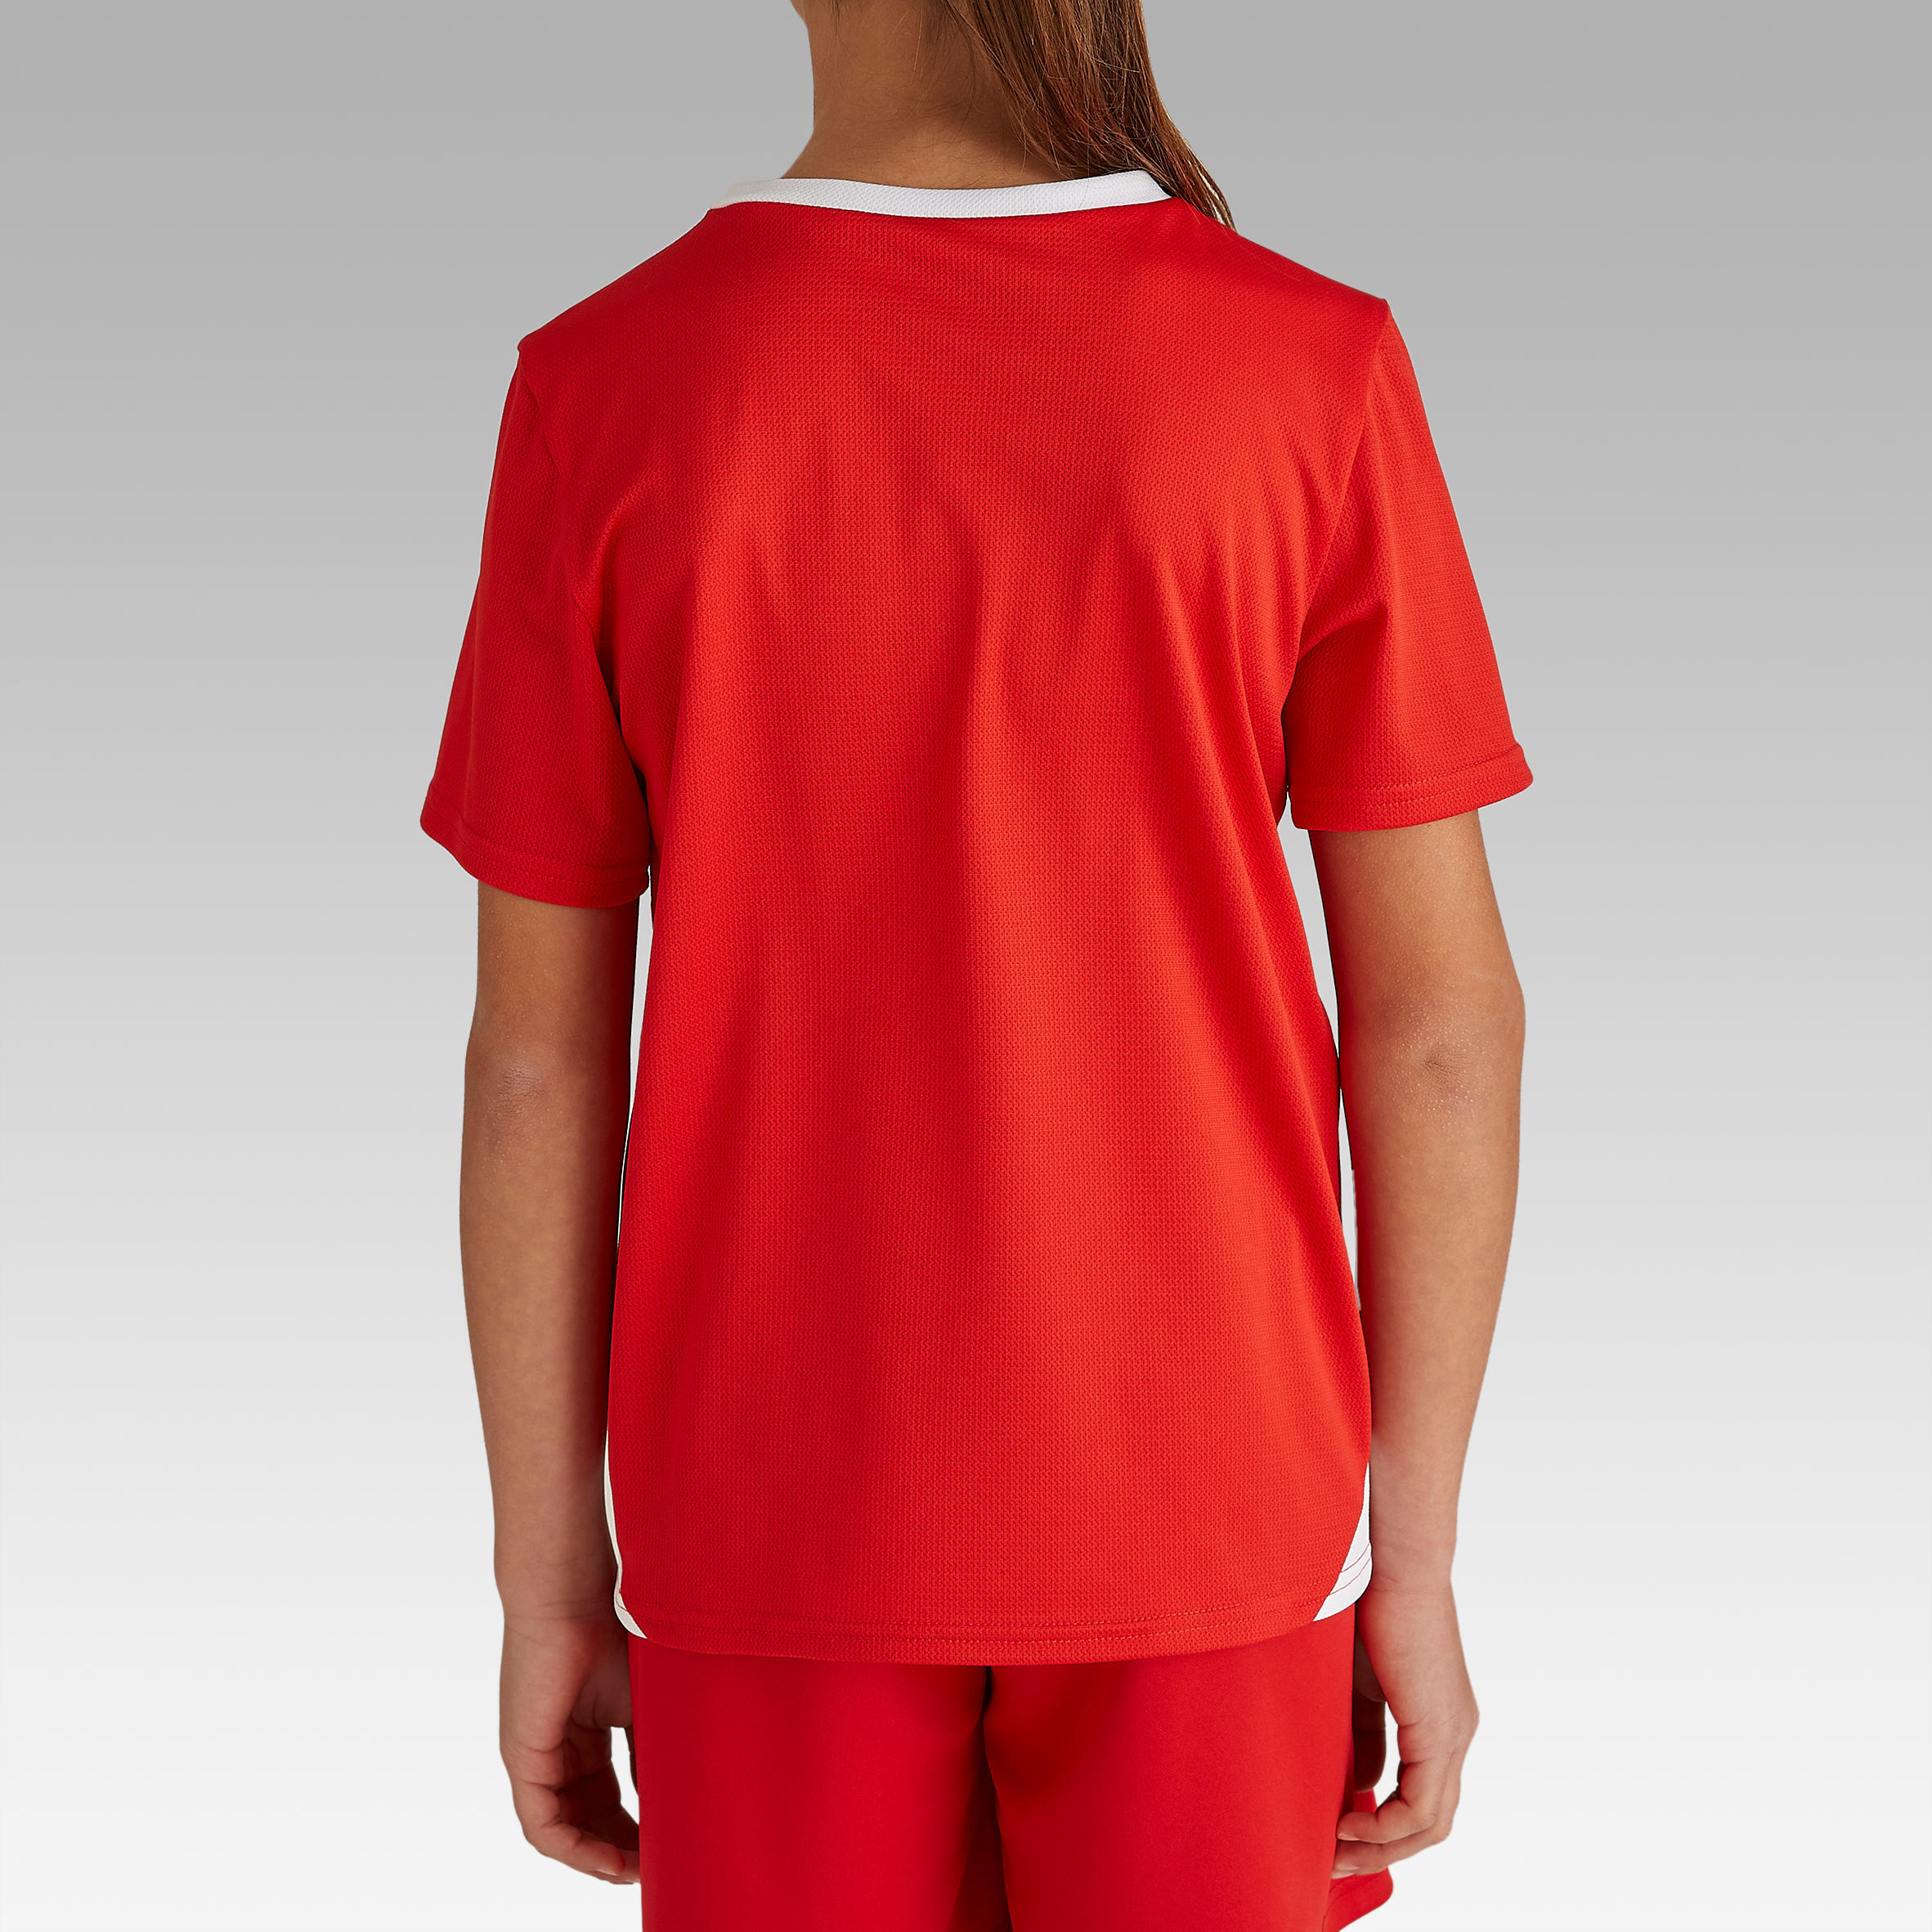 Kids' Football Shirt Essential - Red 4/8